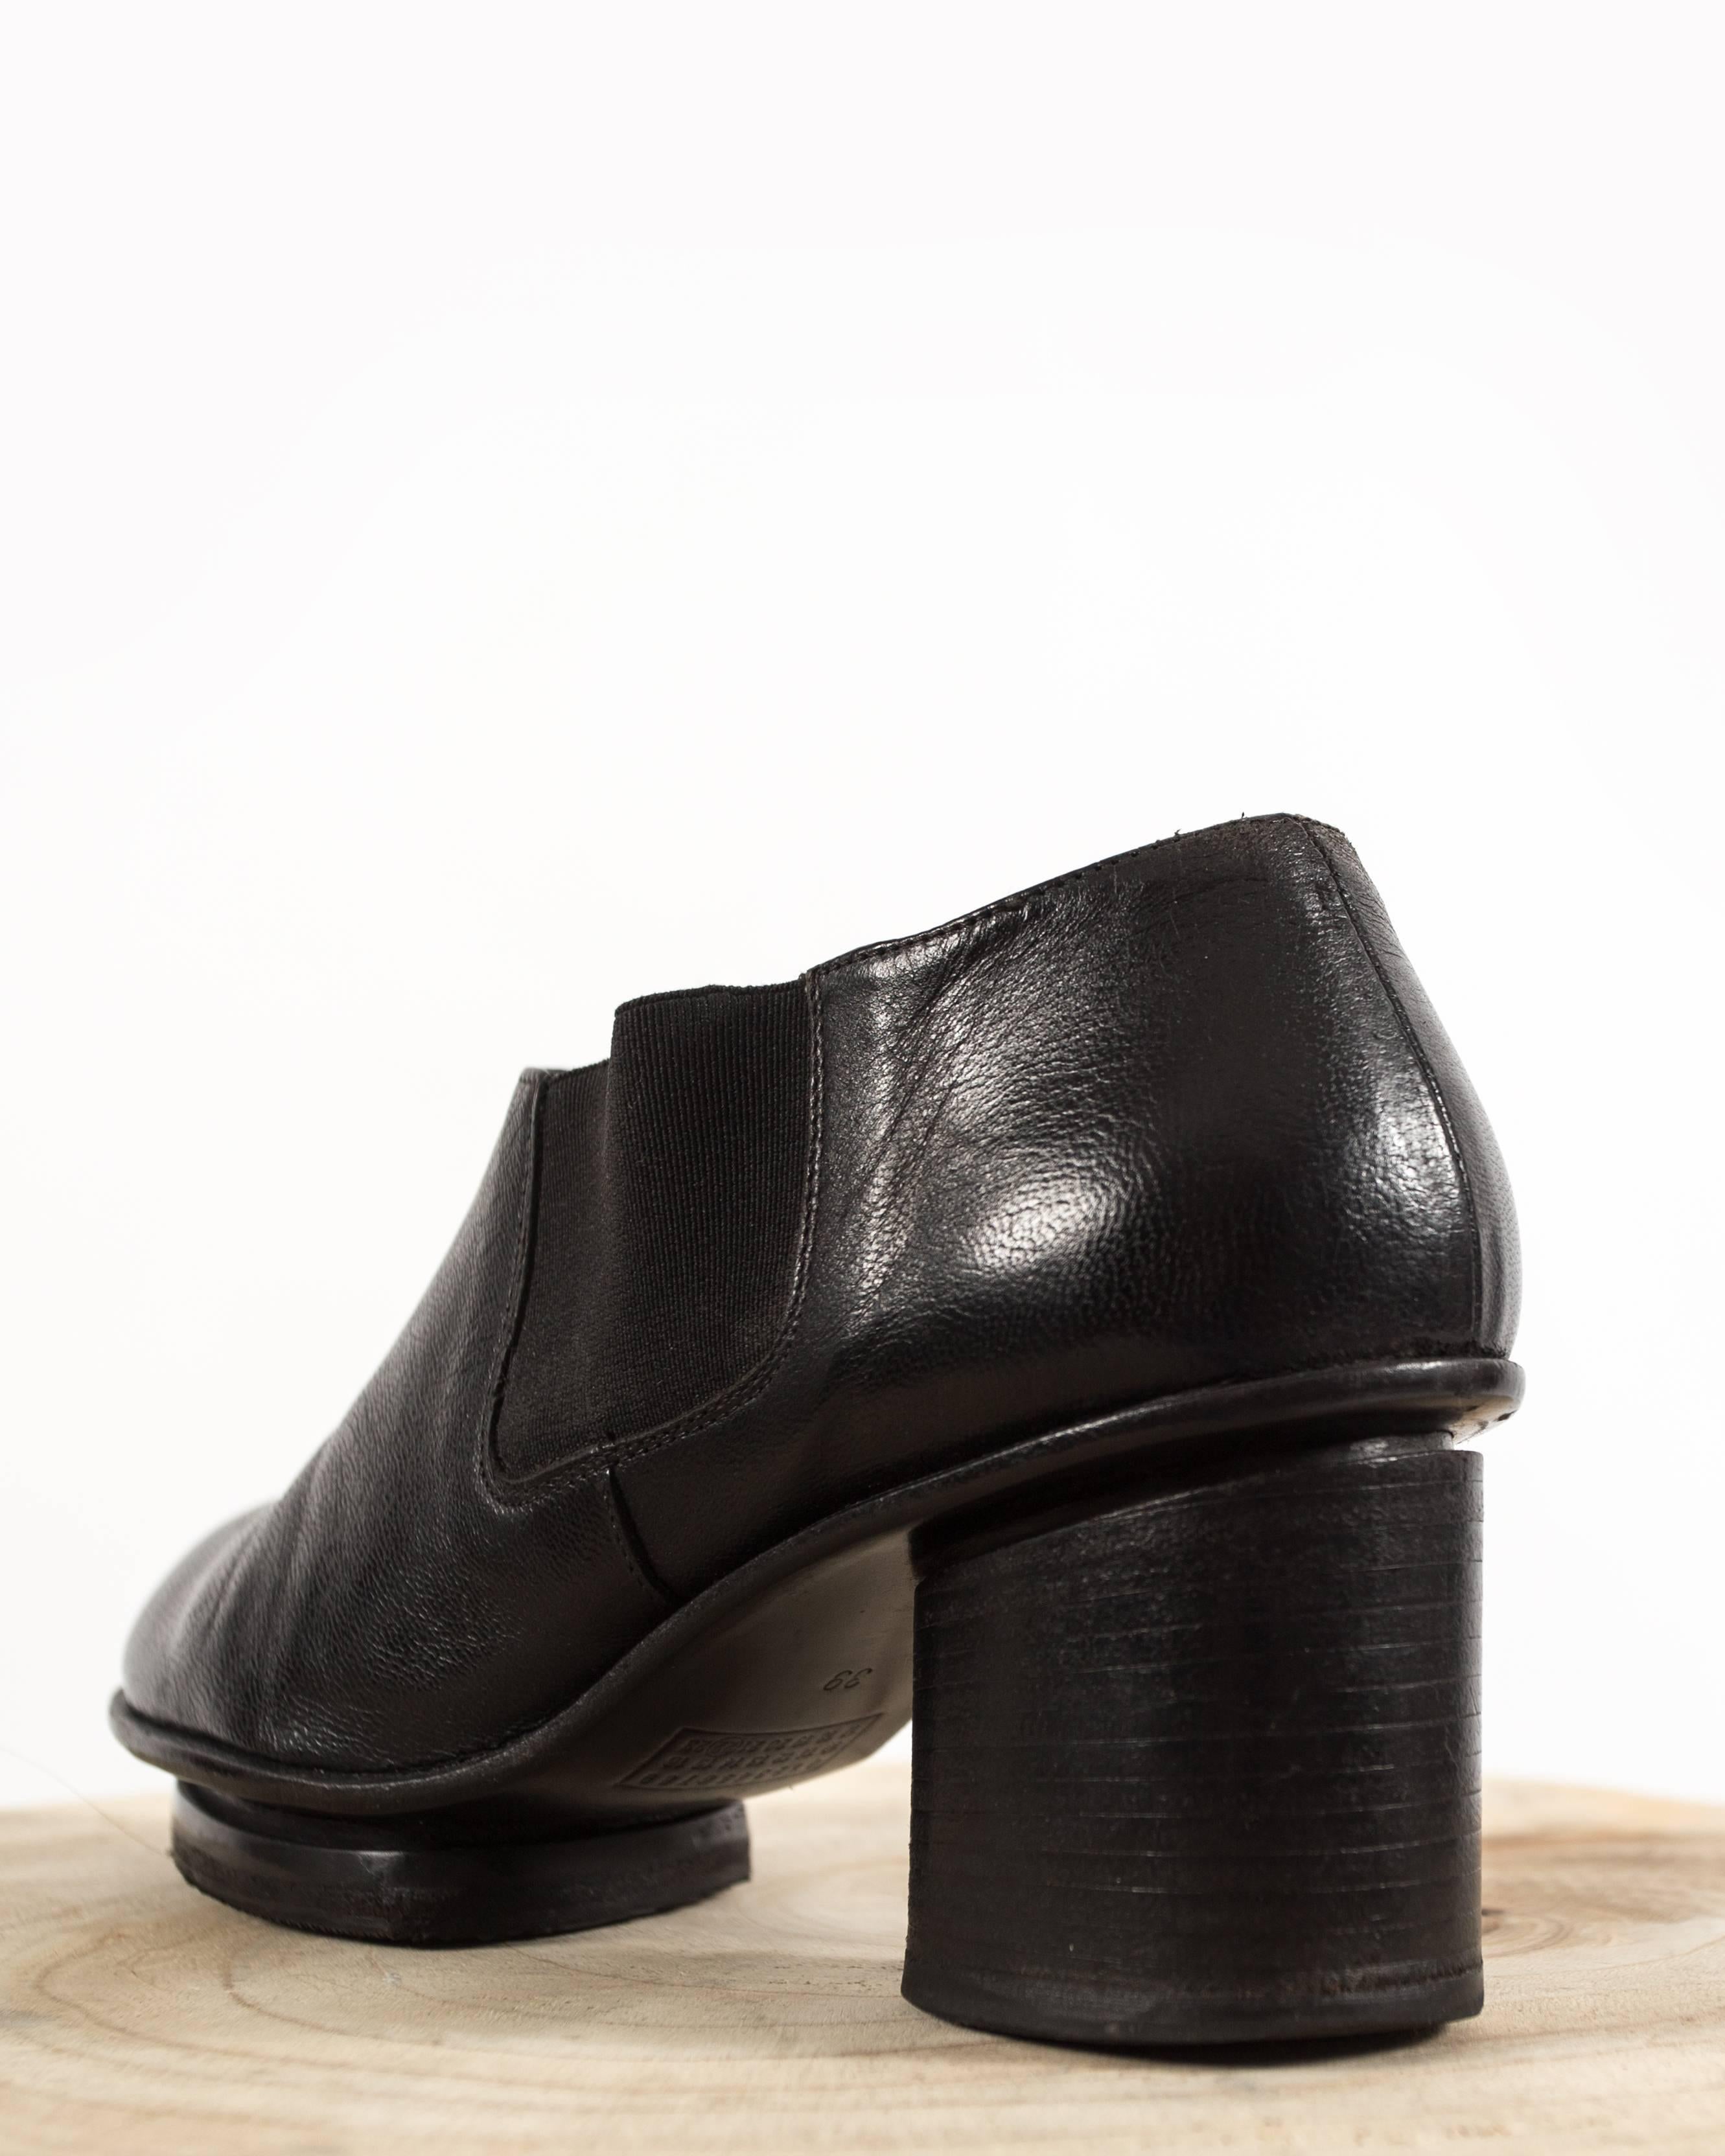 Maison Martin Margiela Autumn-Winter 1999 black leather shoes with ...